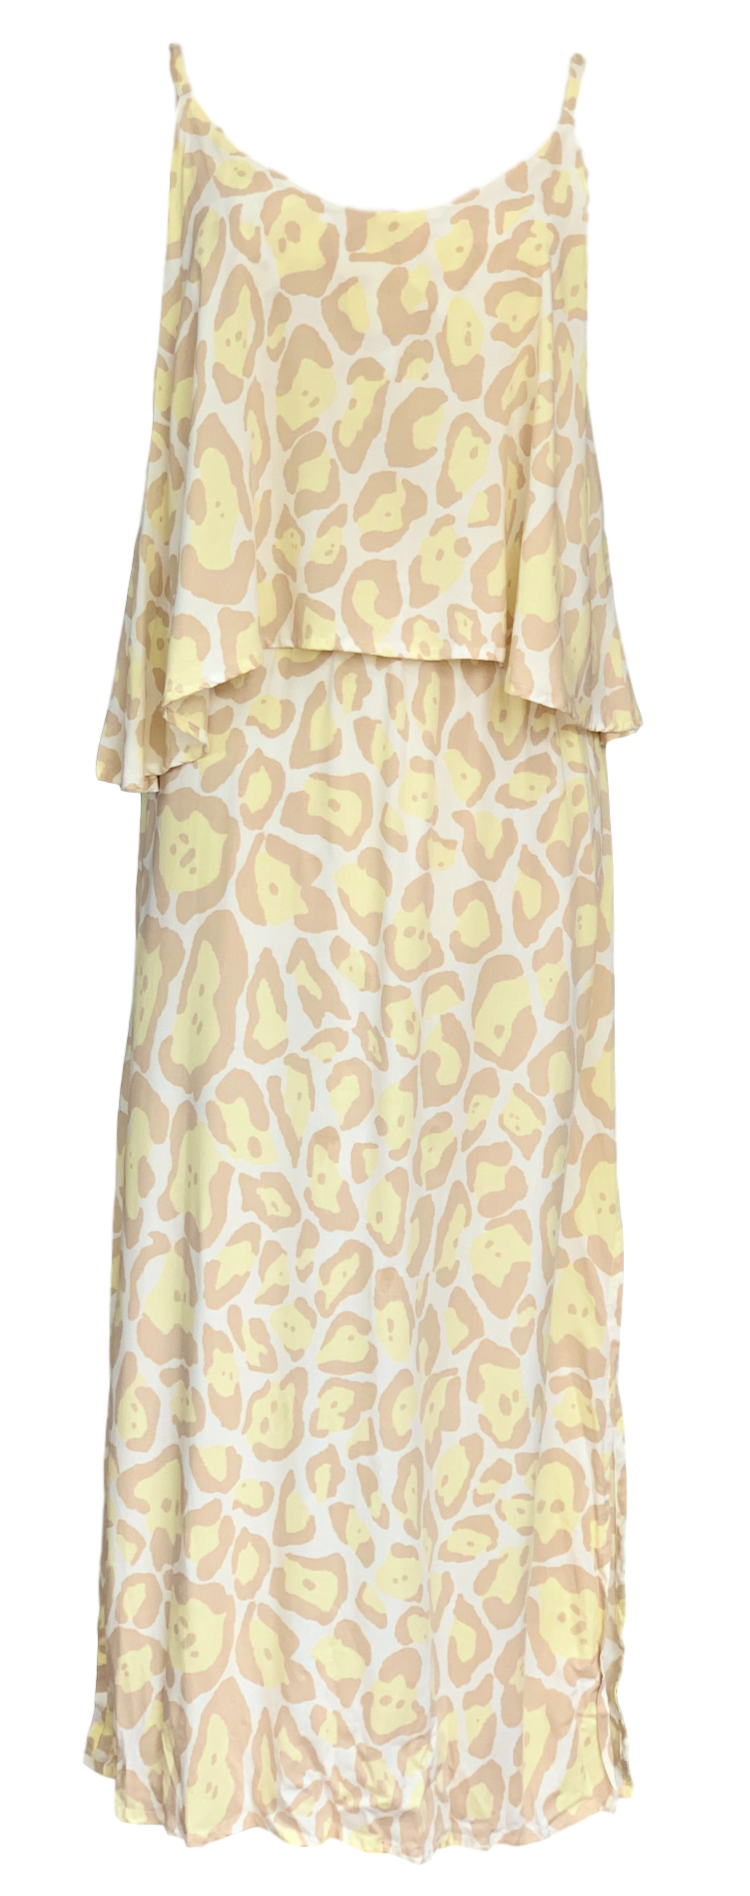 Adriana Layer Dress - Yellow Leopard